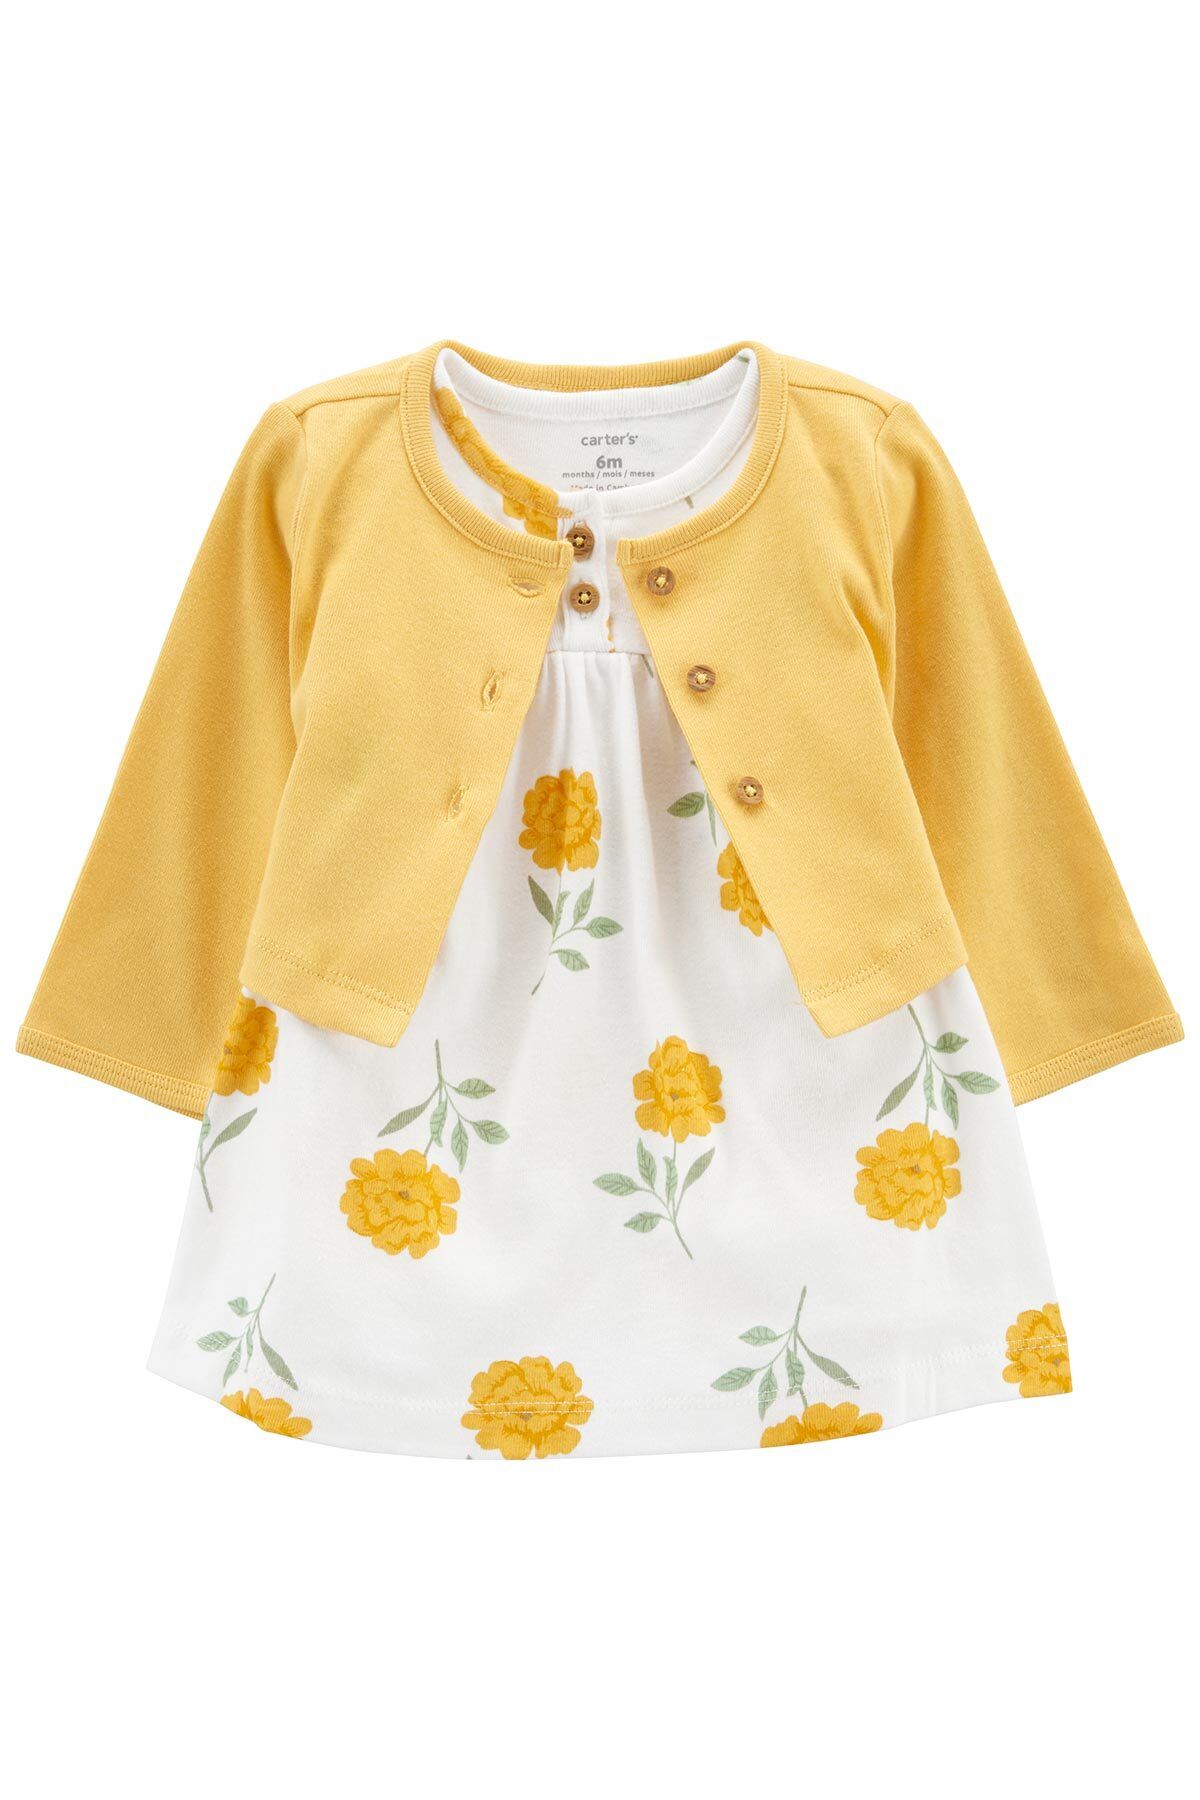 Carter's Kız Bebek Elbise Set 2'li Paket Sarı